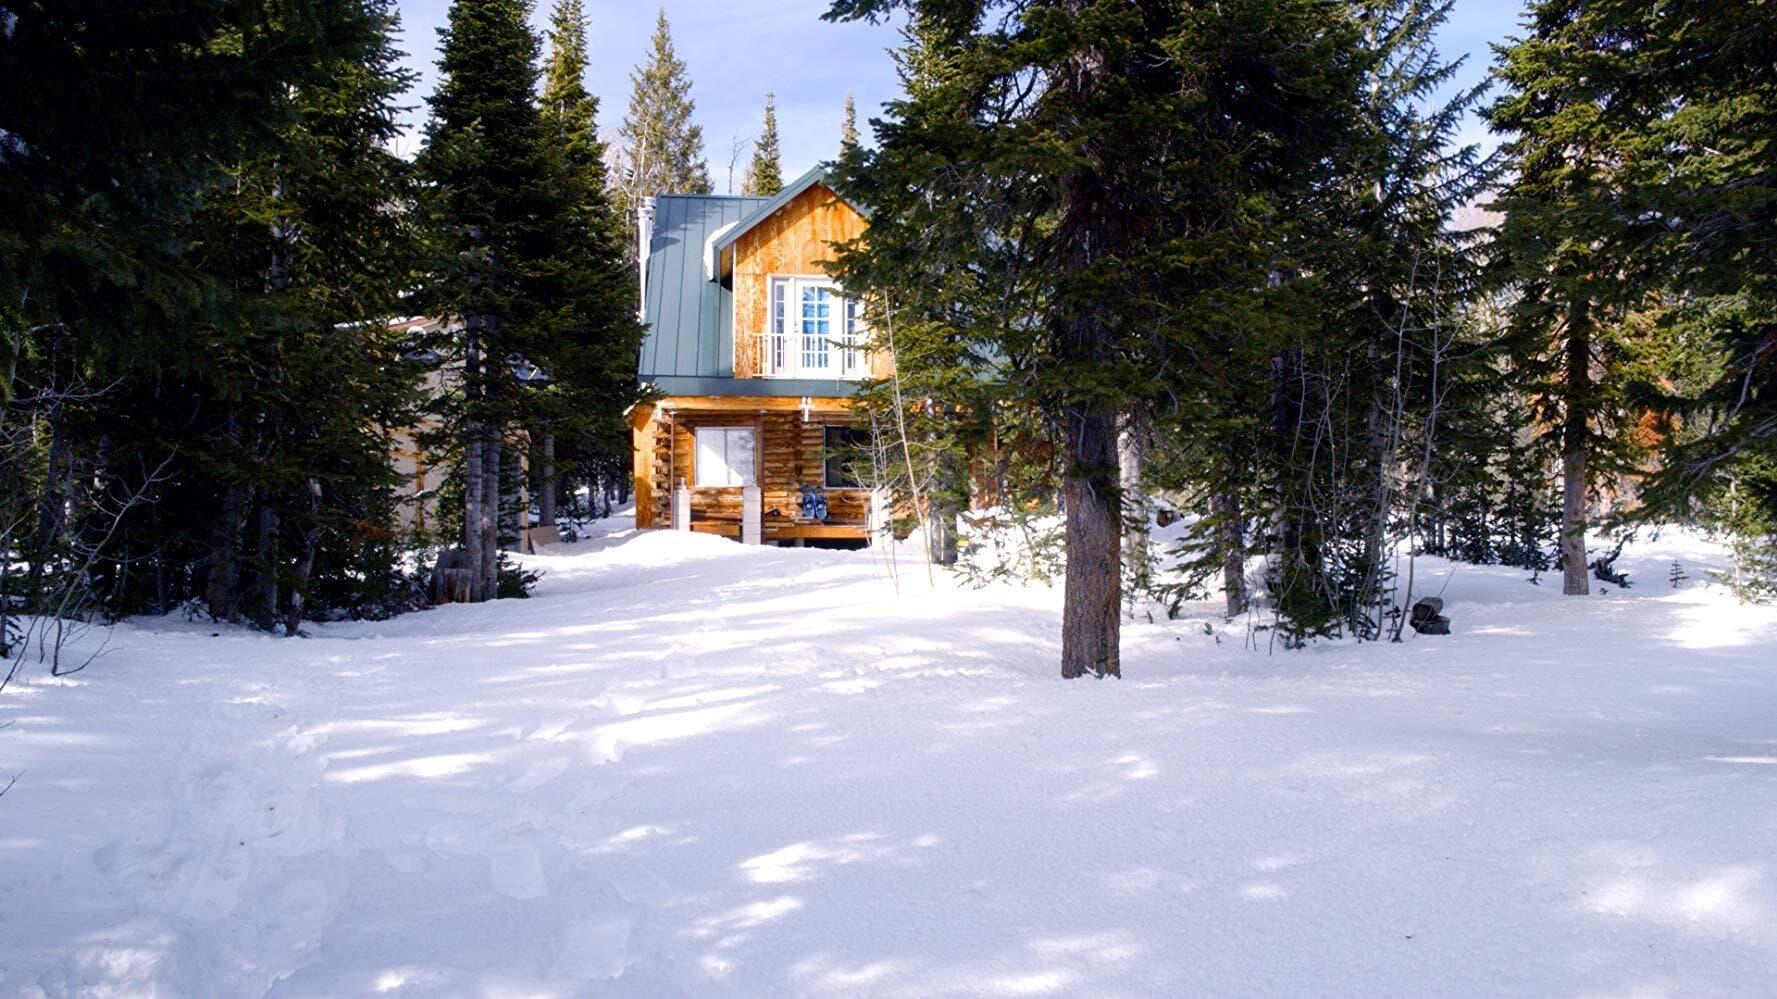 The Christmas Cabin backdrop